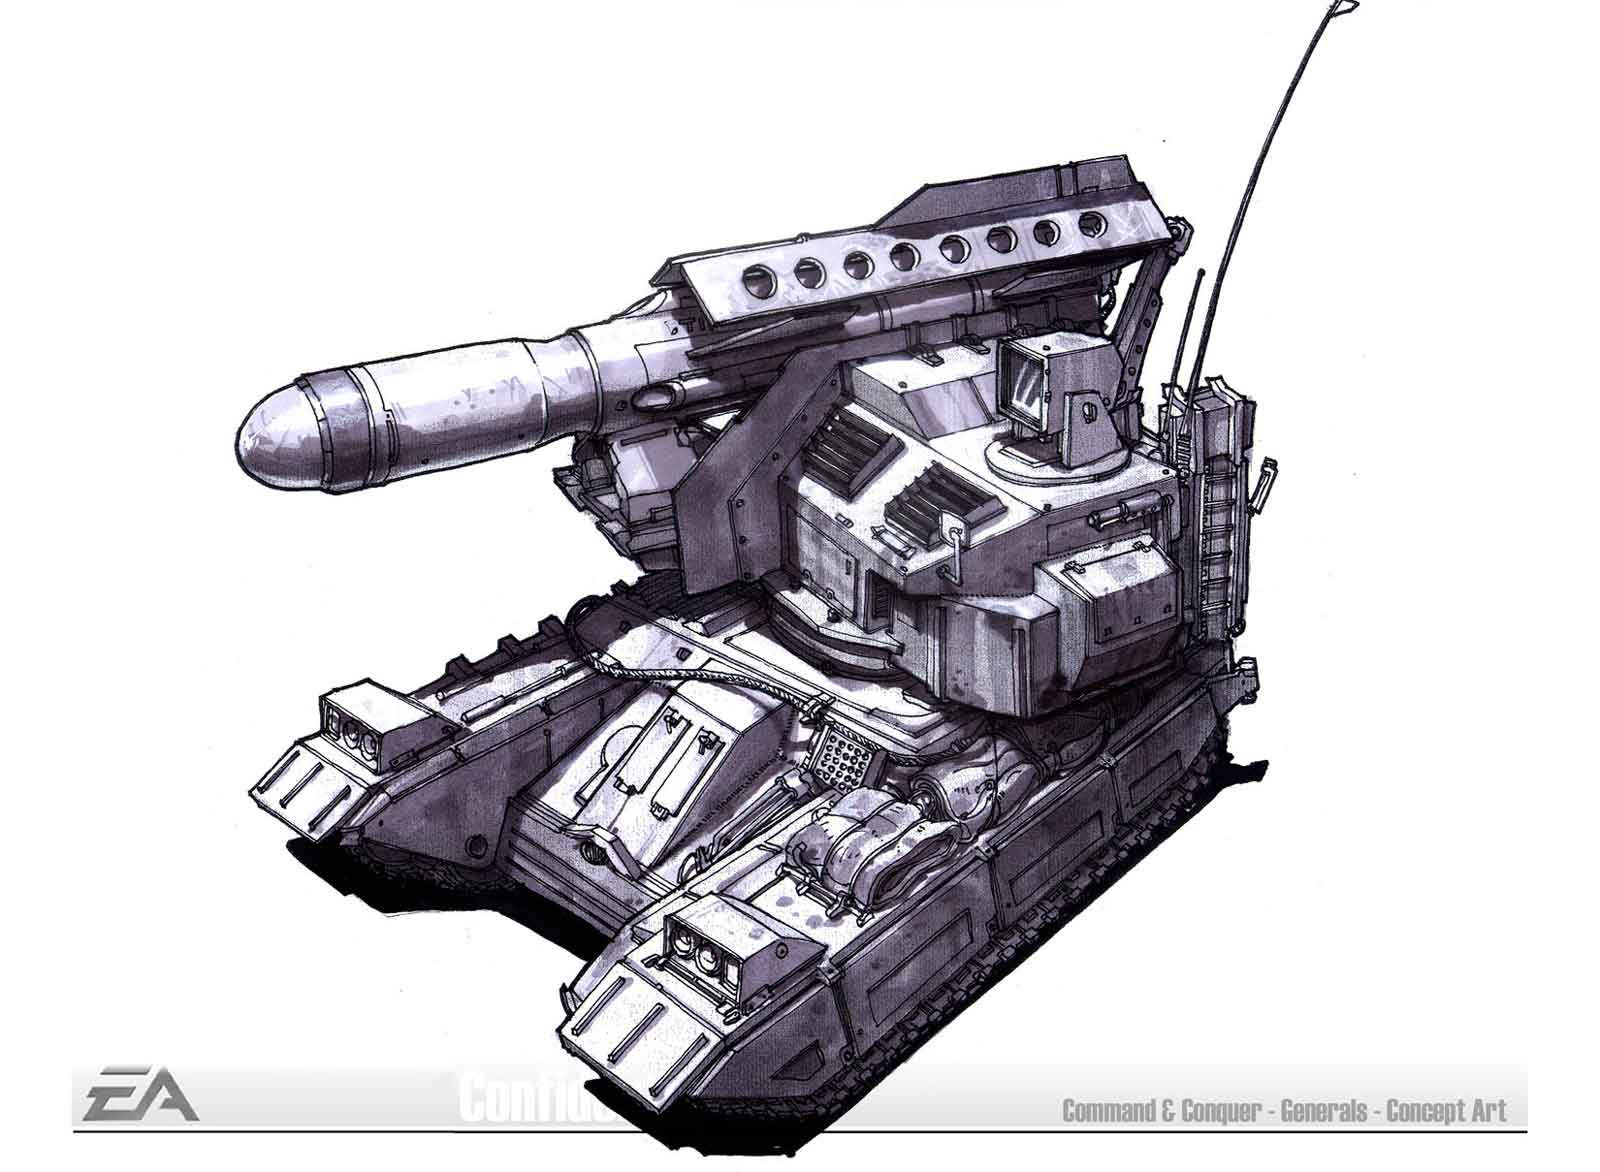 Concept Art - File: american_tomahawk_missile.jpg